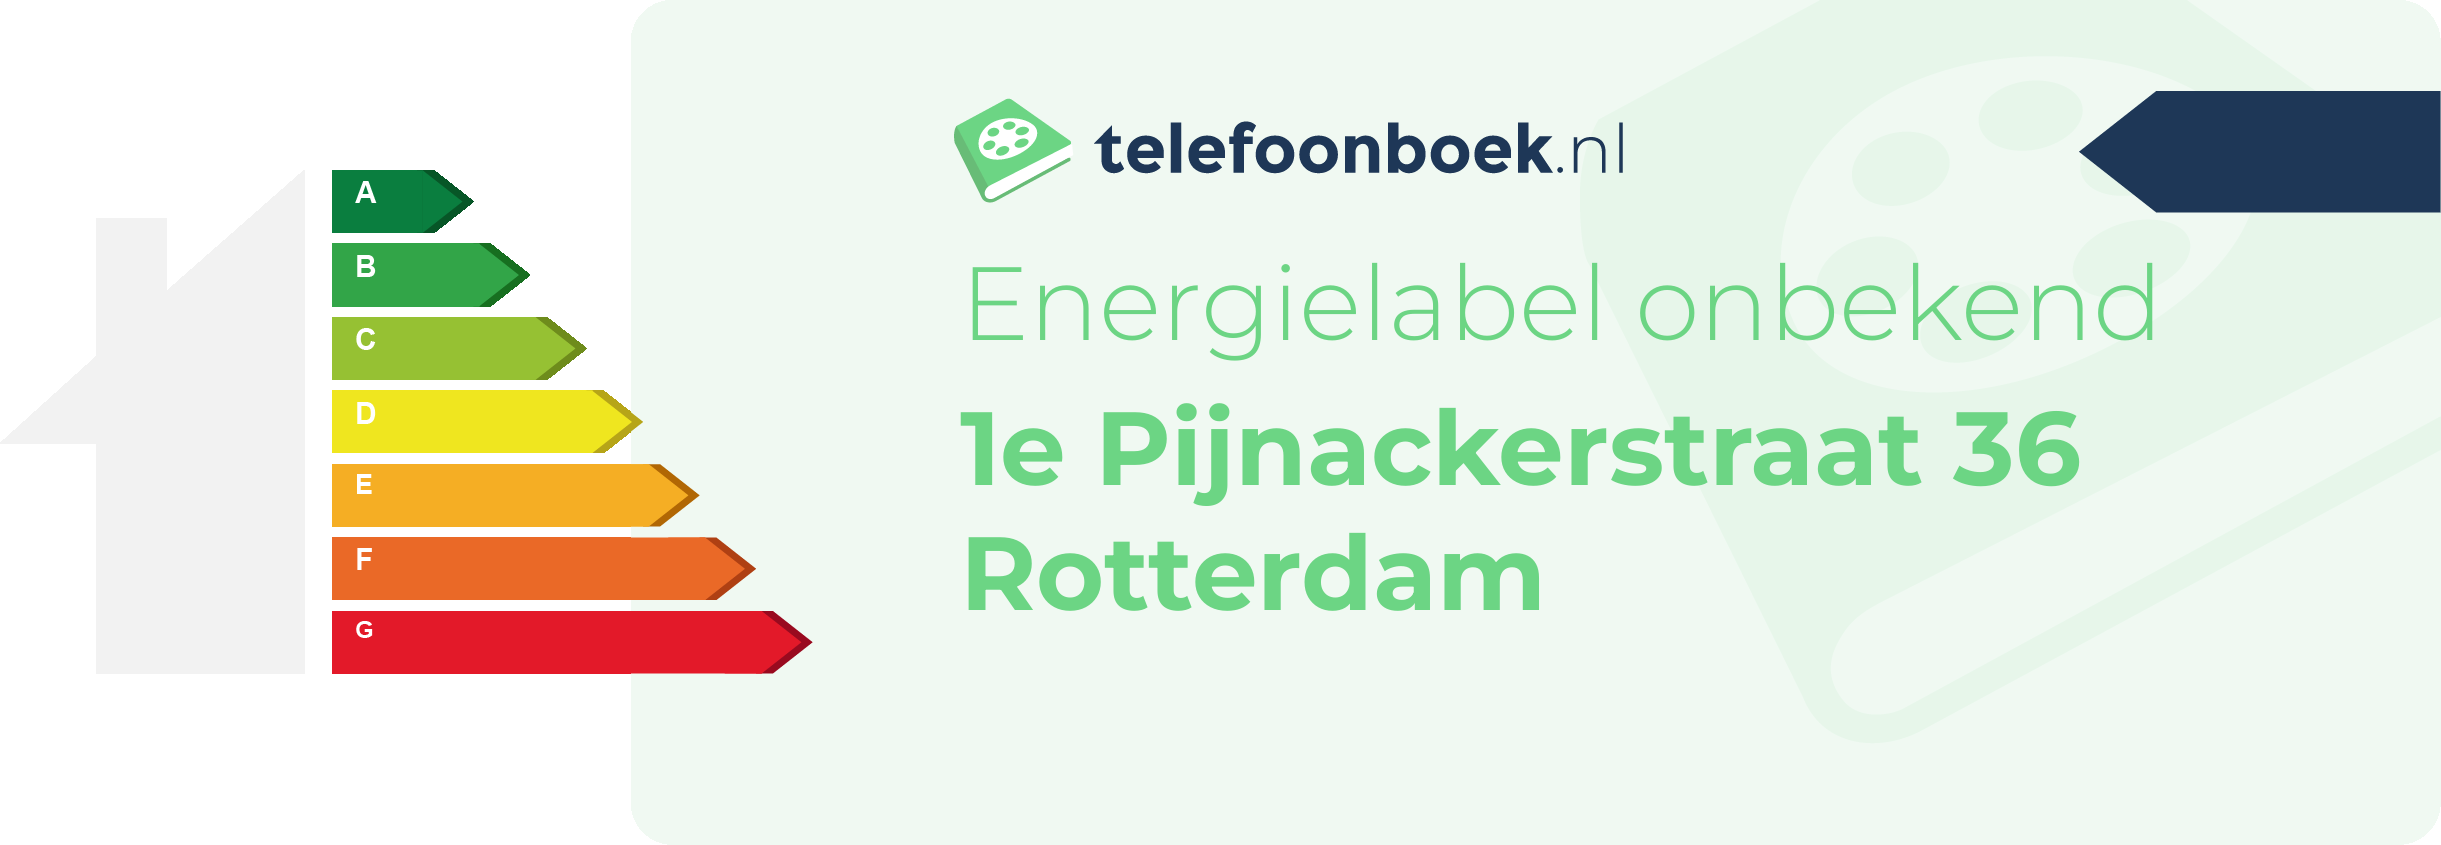 Energielabel 1e Pijnackerstraat 36 Rotterdam